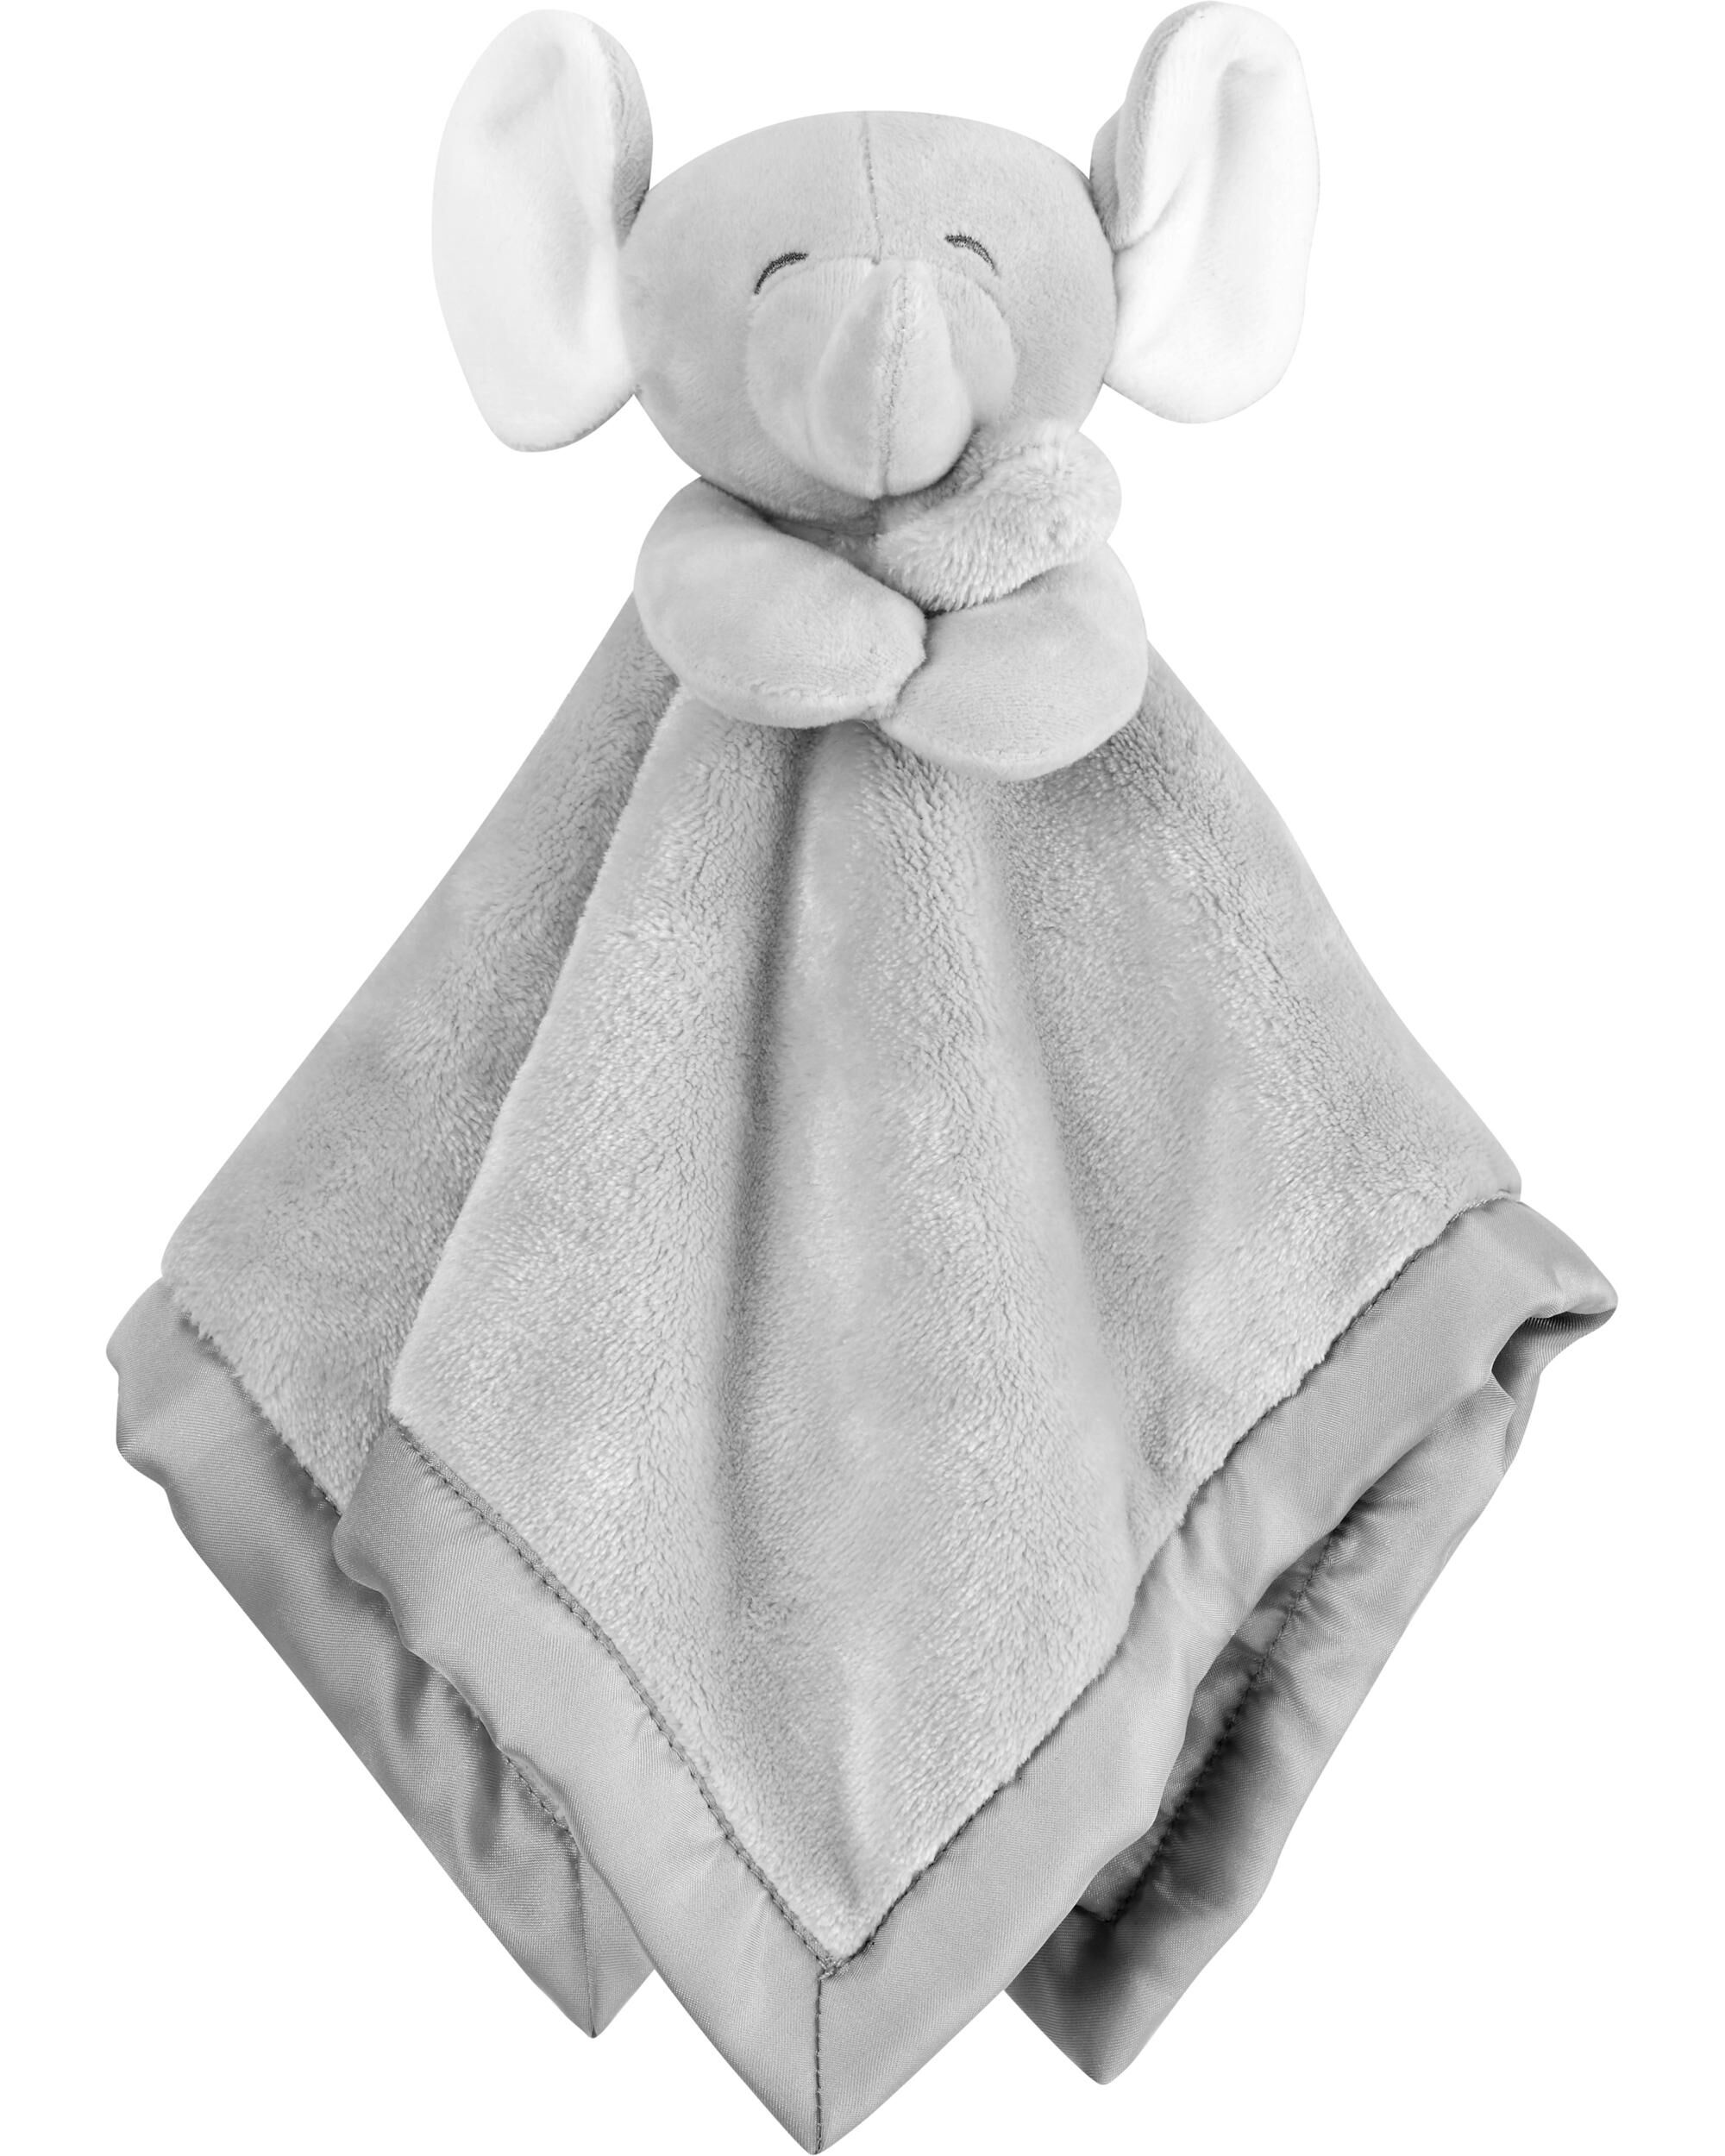 Carters Gray Plush Elephant Baby Security Blanket Blankie Lovey 15x15 